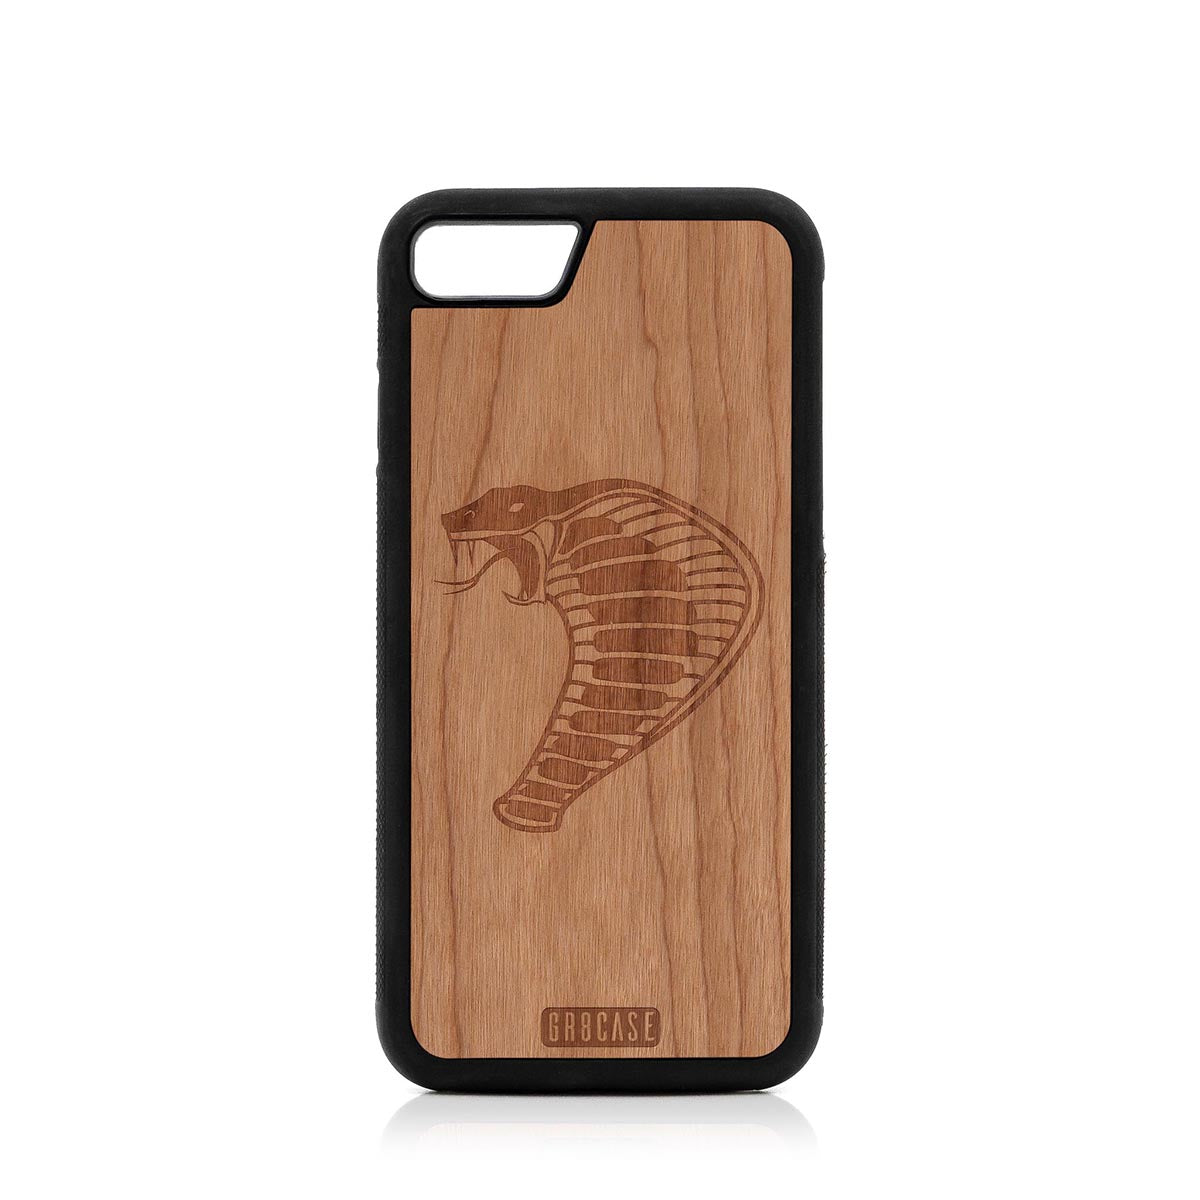 Cobra Design Wood Case For iPhone 7/8 by GR8CASE